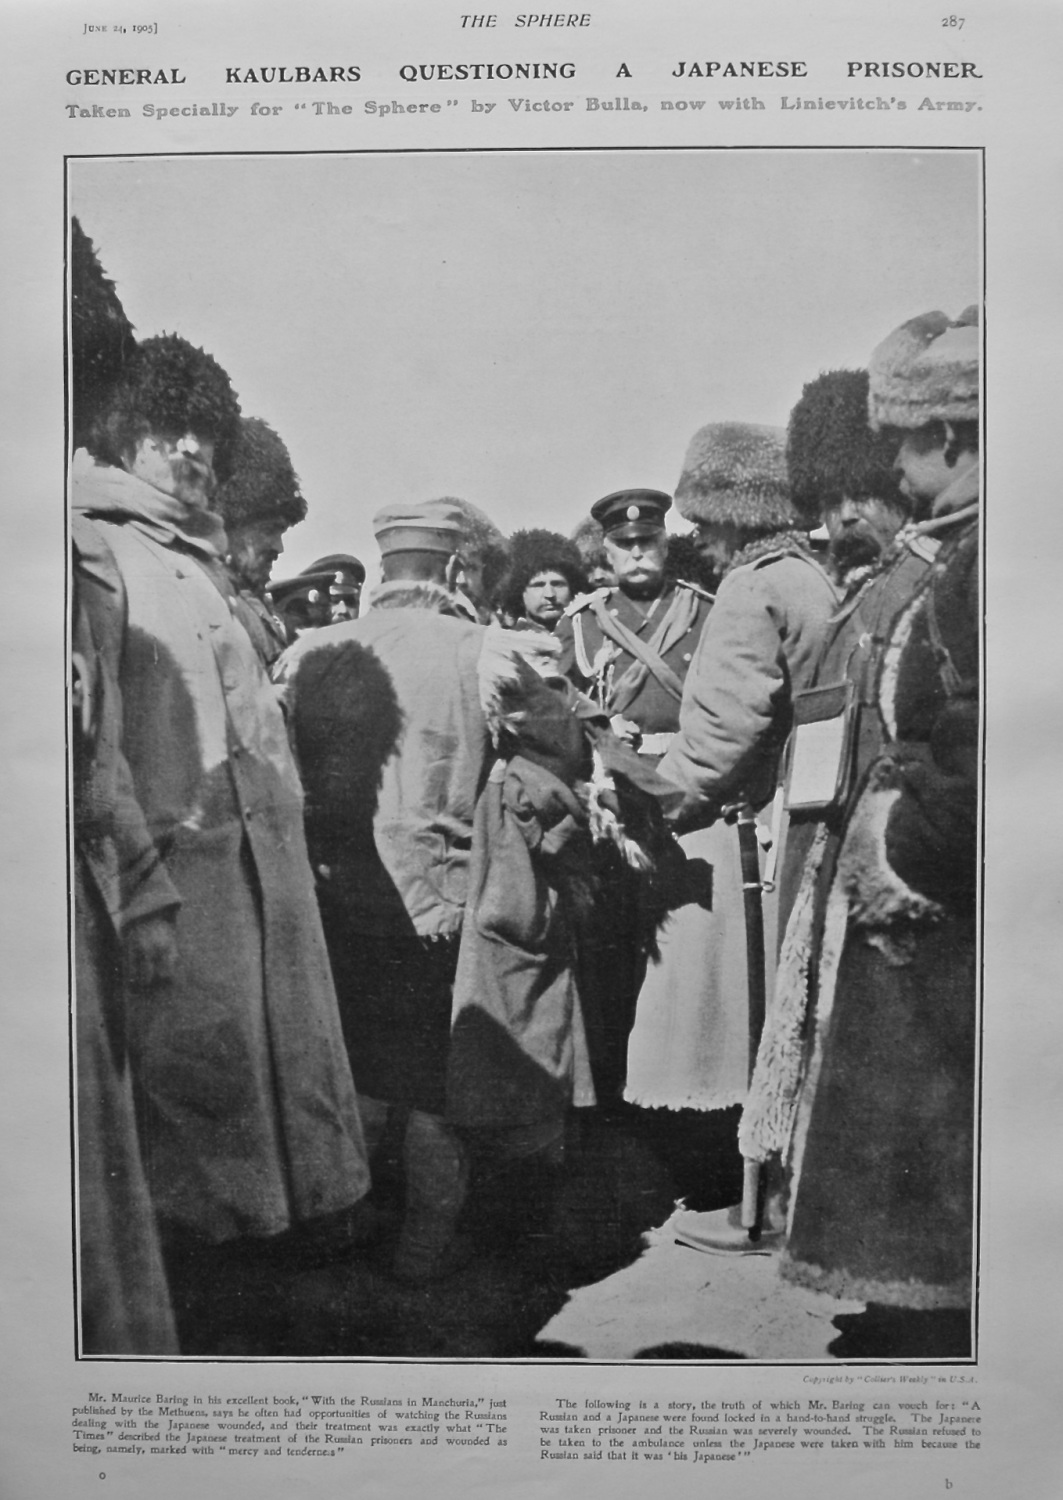 General Kaulbars Questioning a Japanese Prisoner. 1905.